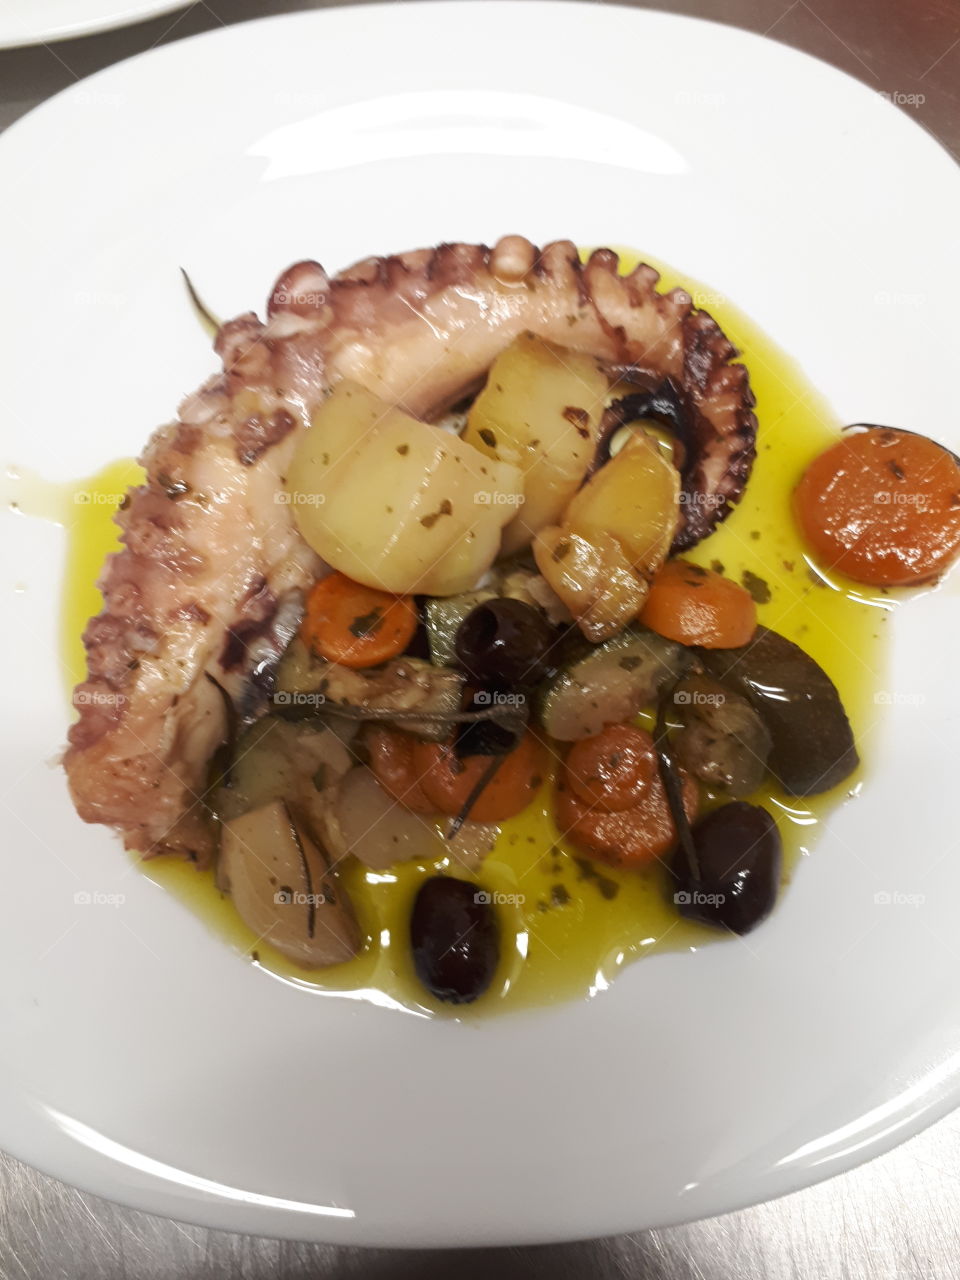 polpo al forno con verdure miste....
baked octopus with mixed vegetables.....
original recipe of "Caffe Bistrot da i secco".....
by Raffaello